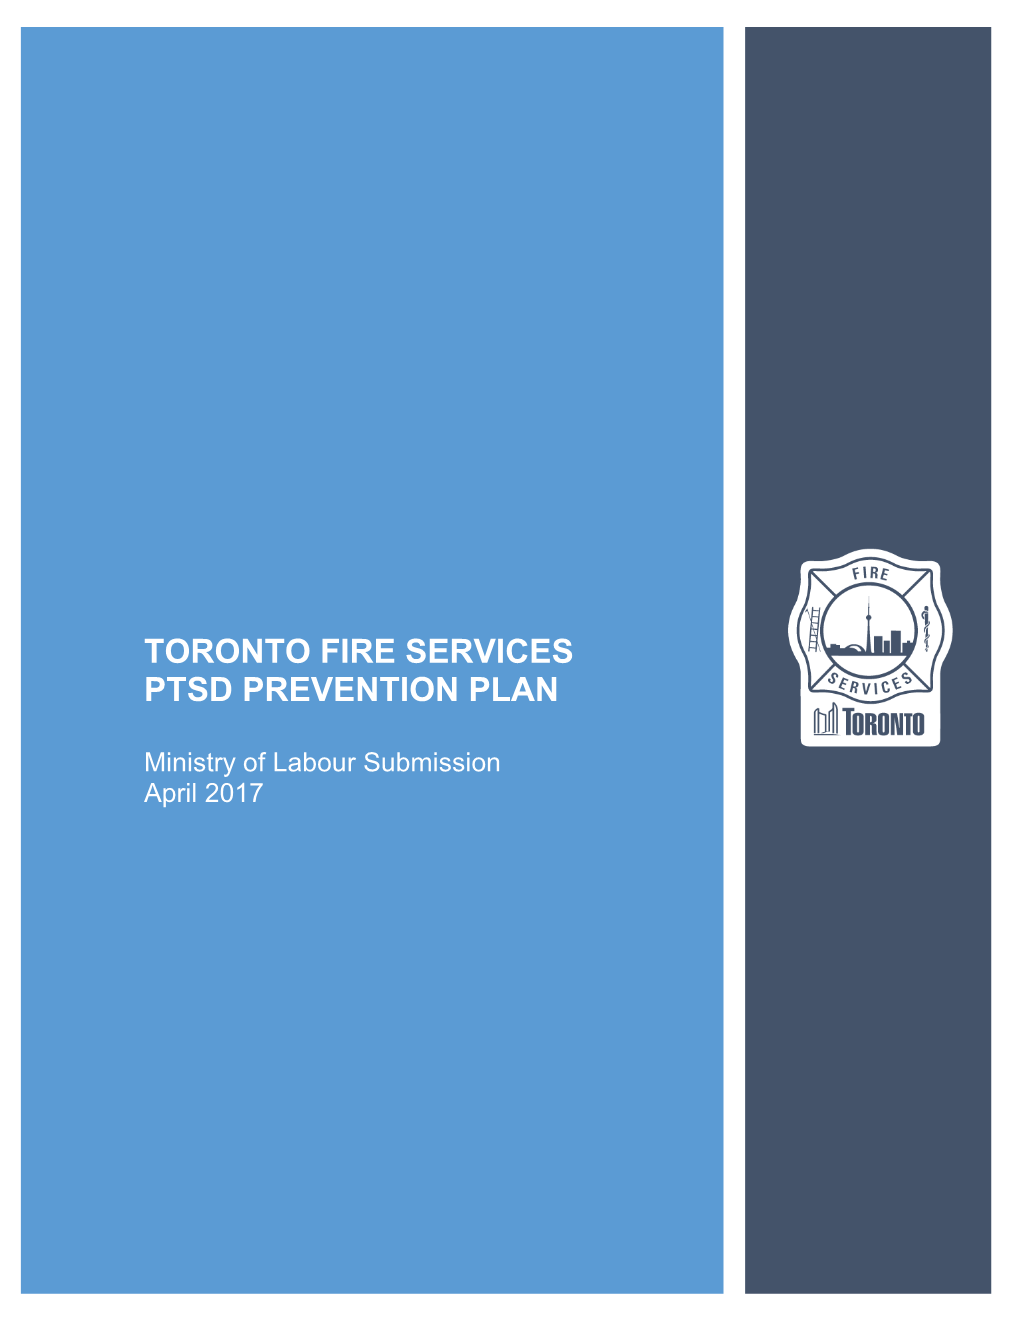 Toronto Fire Services April 2017 PTSD Work Plan